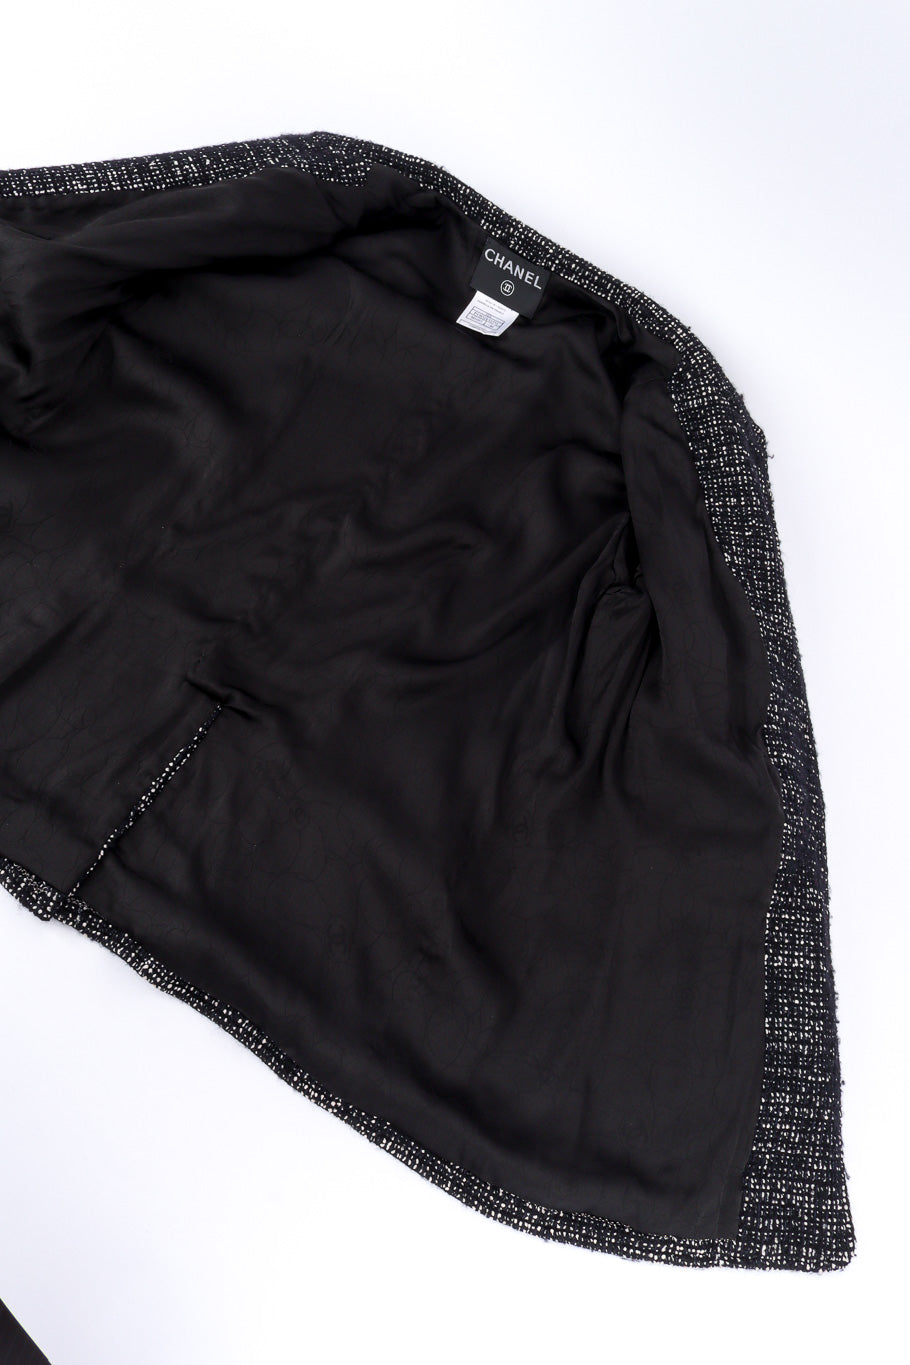 2002 F/W Bouclé Tweed Jacket & Skirt Set by Chanel jacket lining /